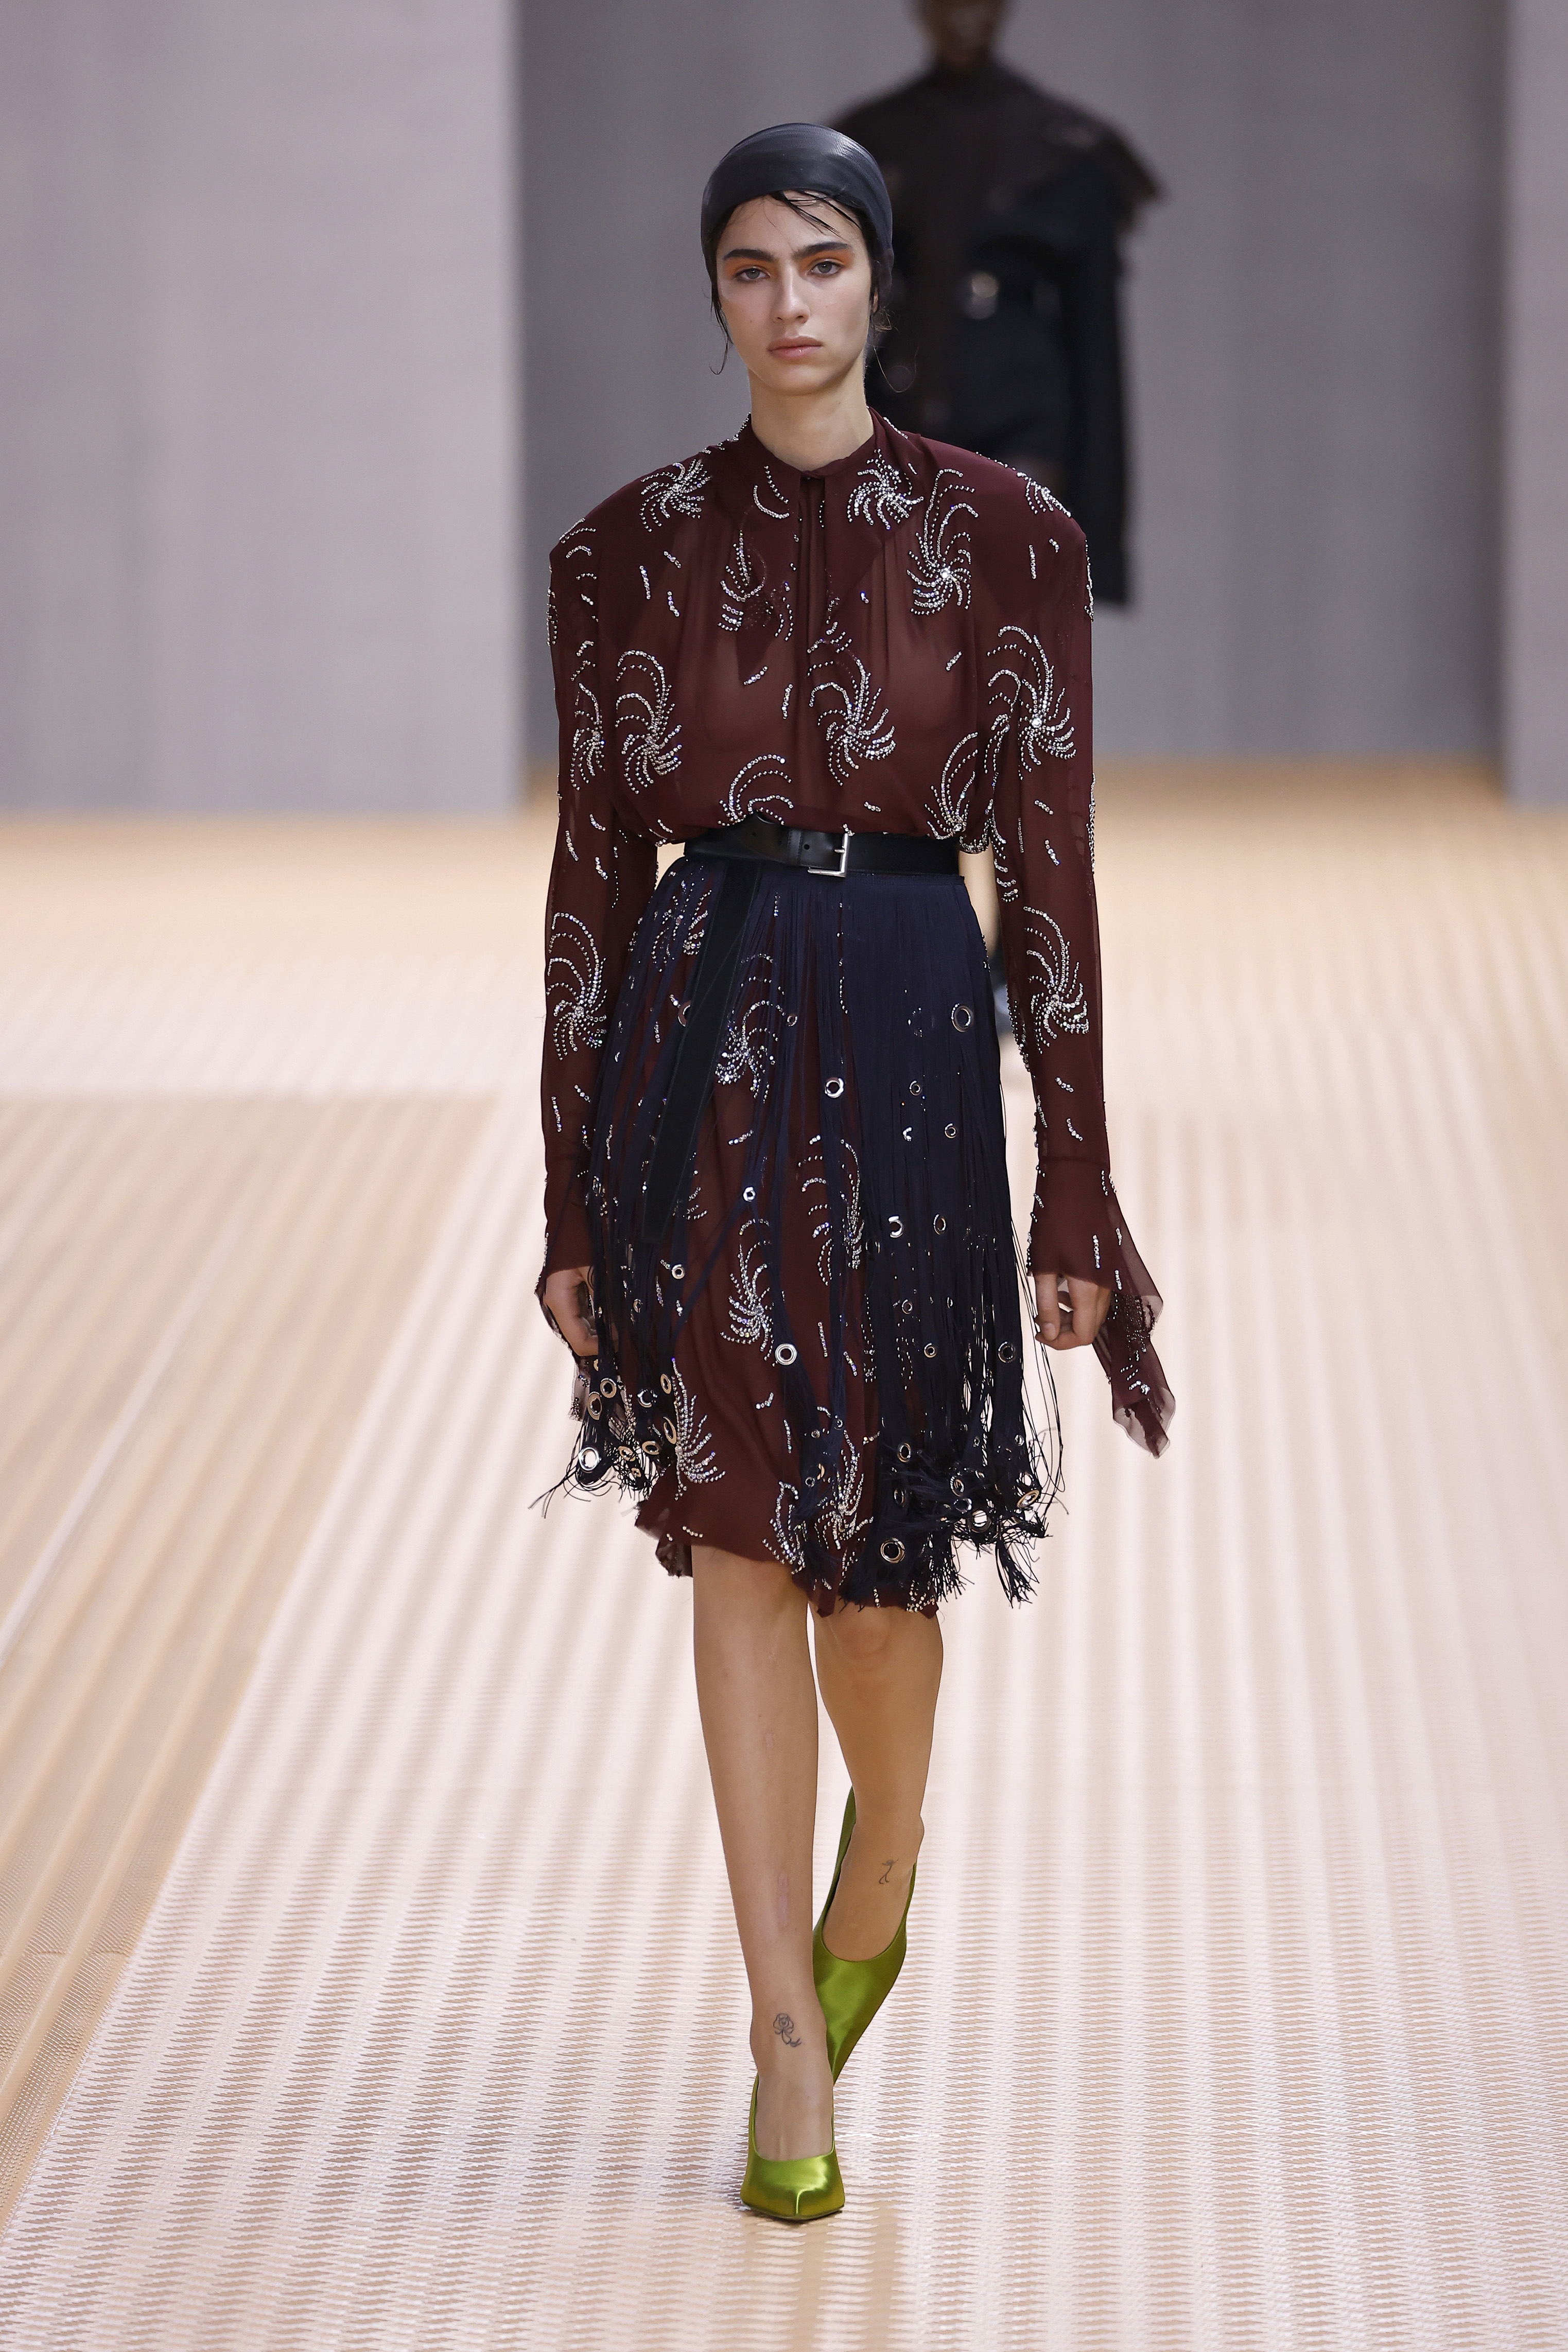 Prada runway image wearing power dressing dress